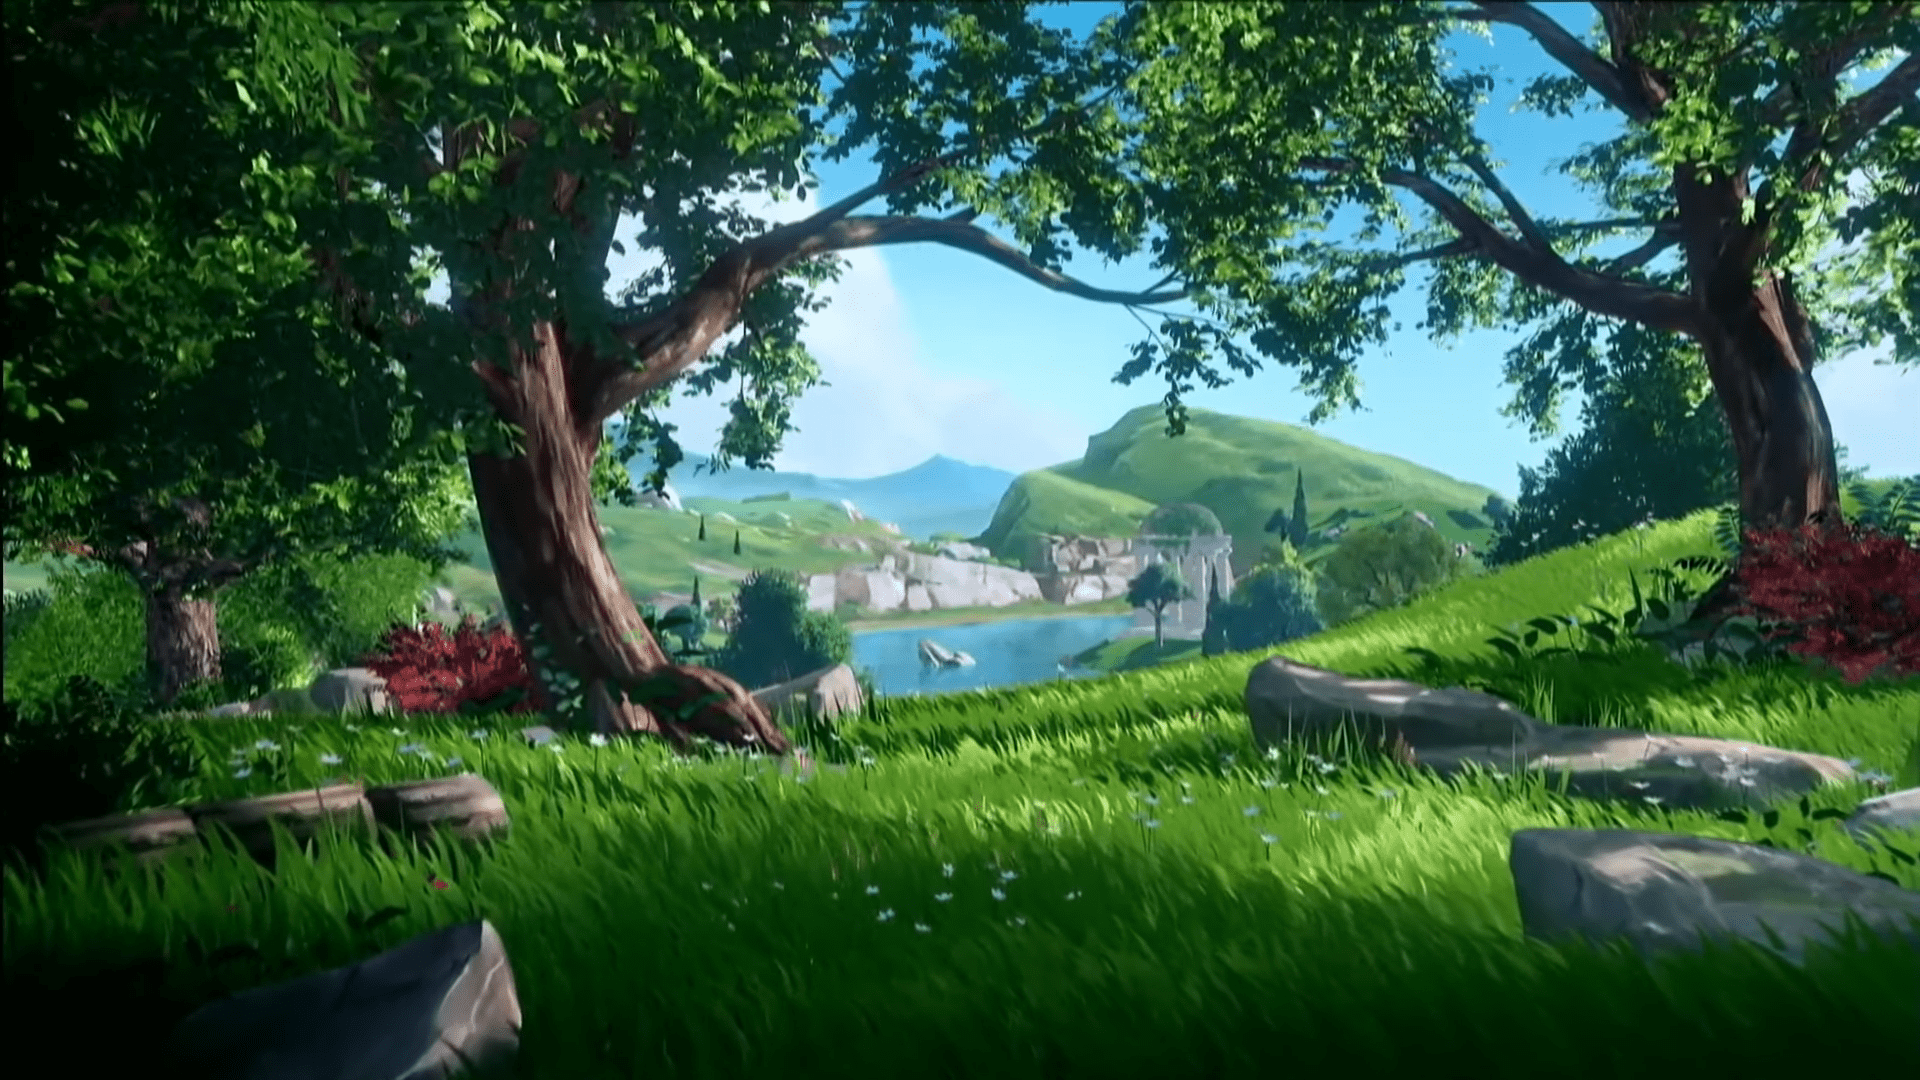 Ubisoft Reveals Teaser Trailer For Upcoming Game Gods & Monsters During E3 Conference